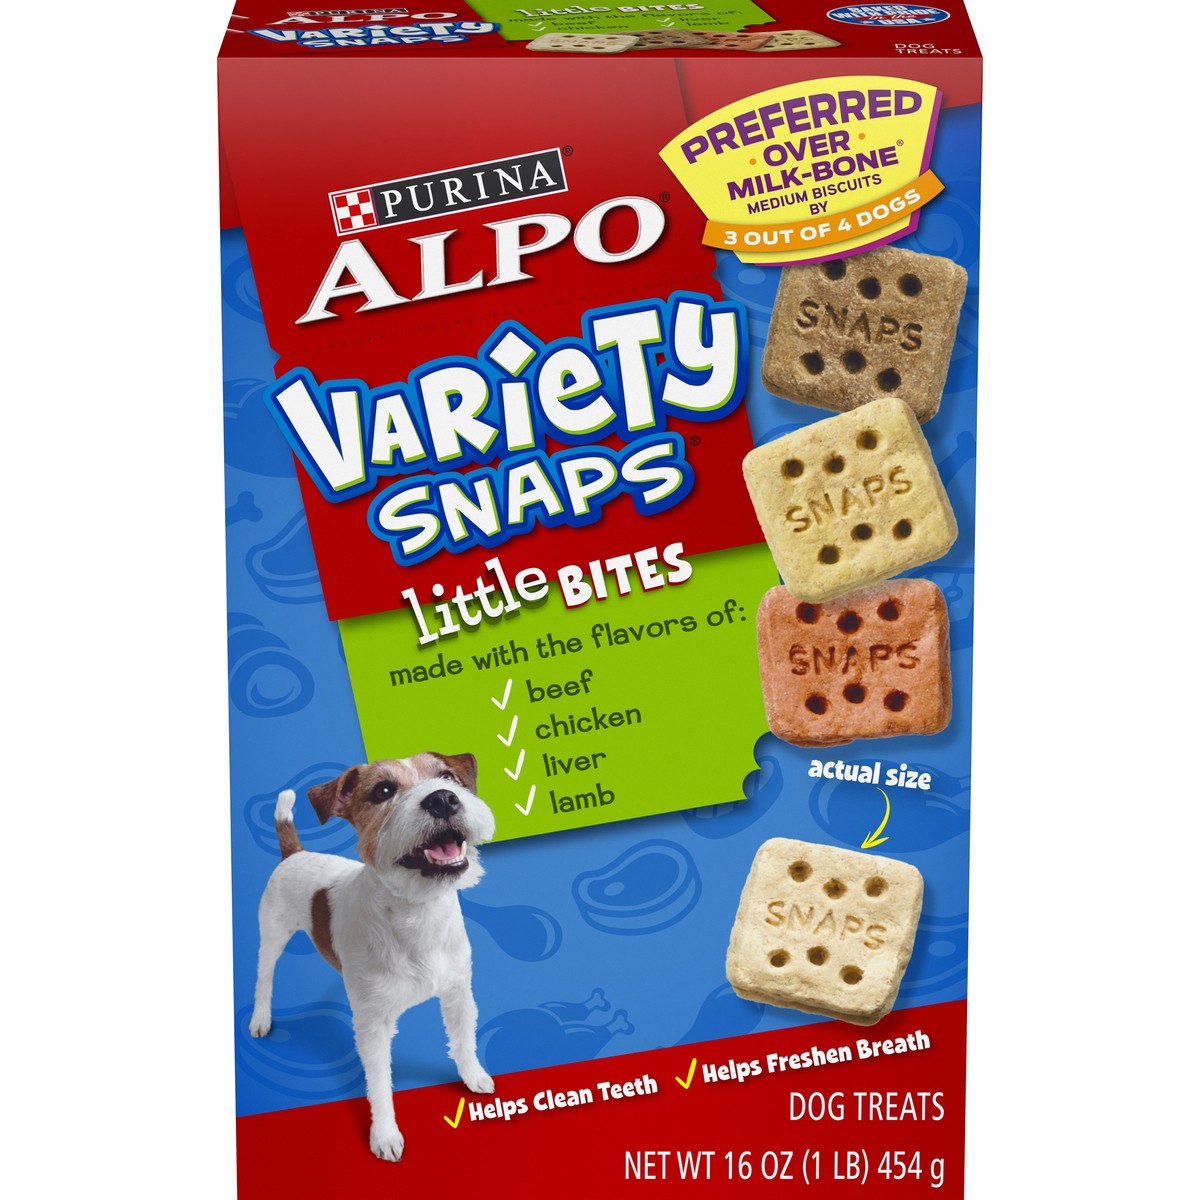 slide 1 of 9, Purina ALPO Dog Treats, Variety Snaps Little Bites Beef, Chicken, Liver, Lamb - 16 oz. Box, 16 oz